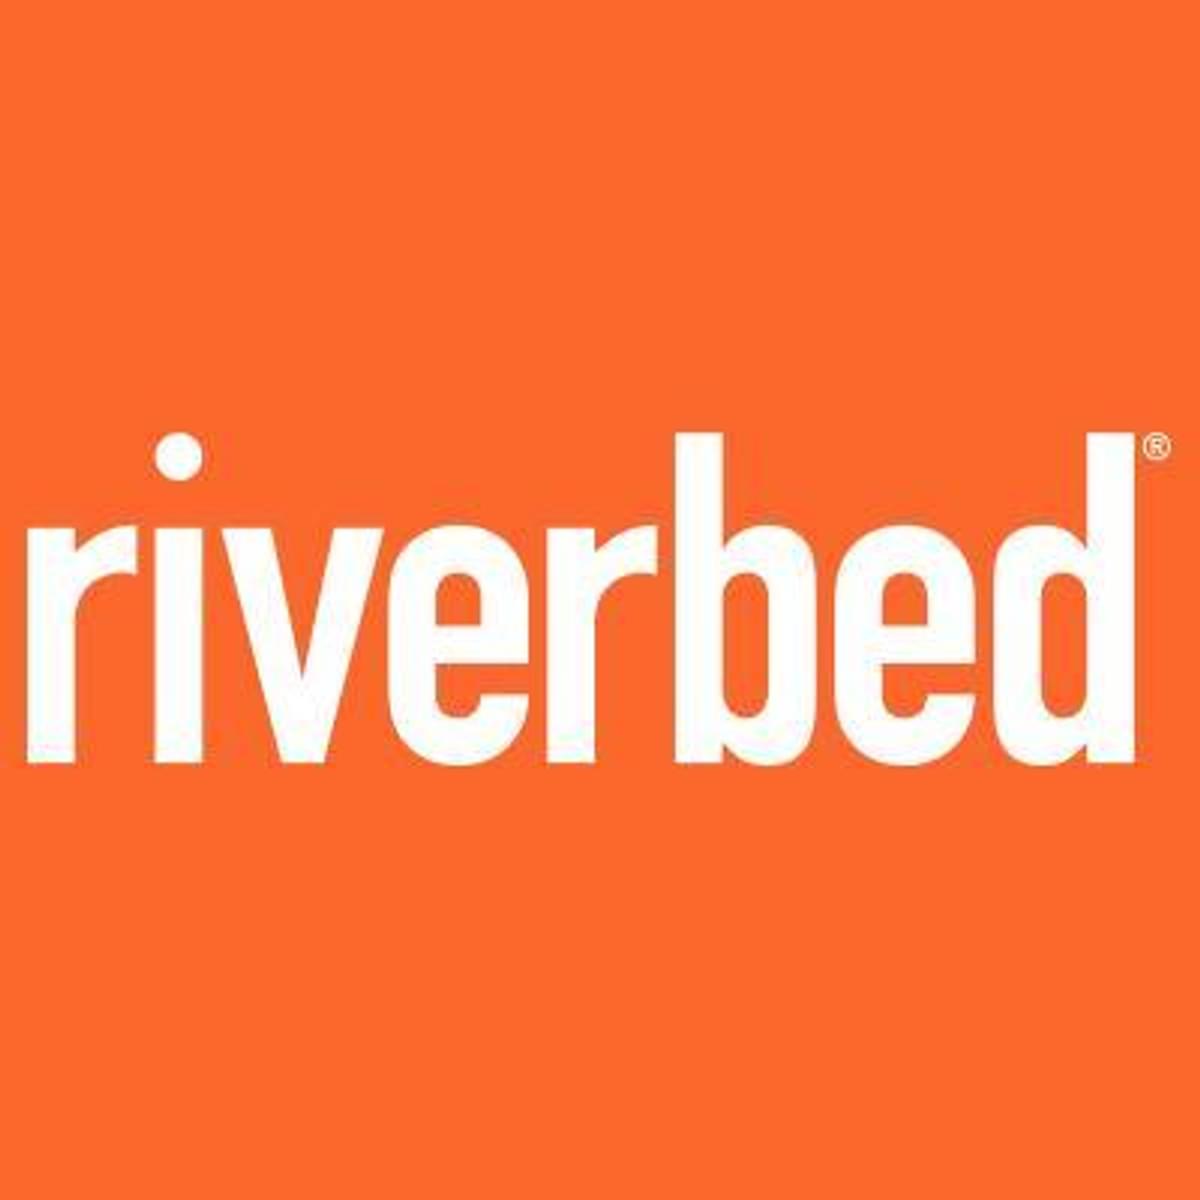 Riverbed Technology koopt wireless specialist Xirrus image